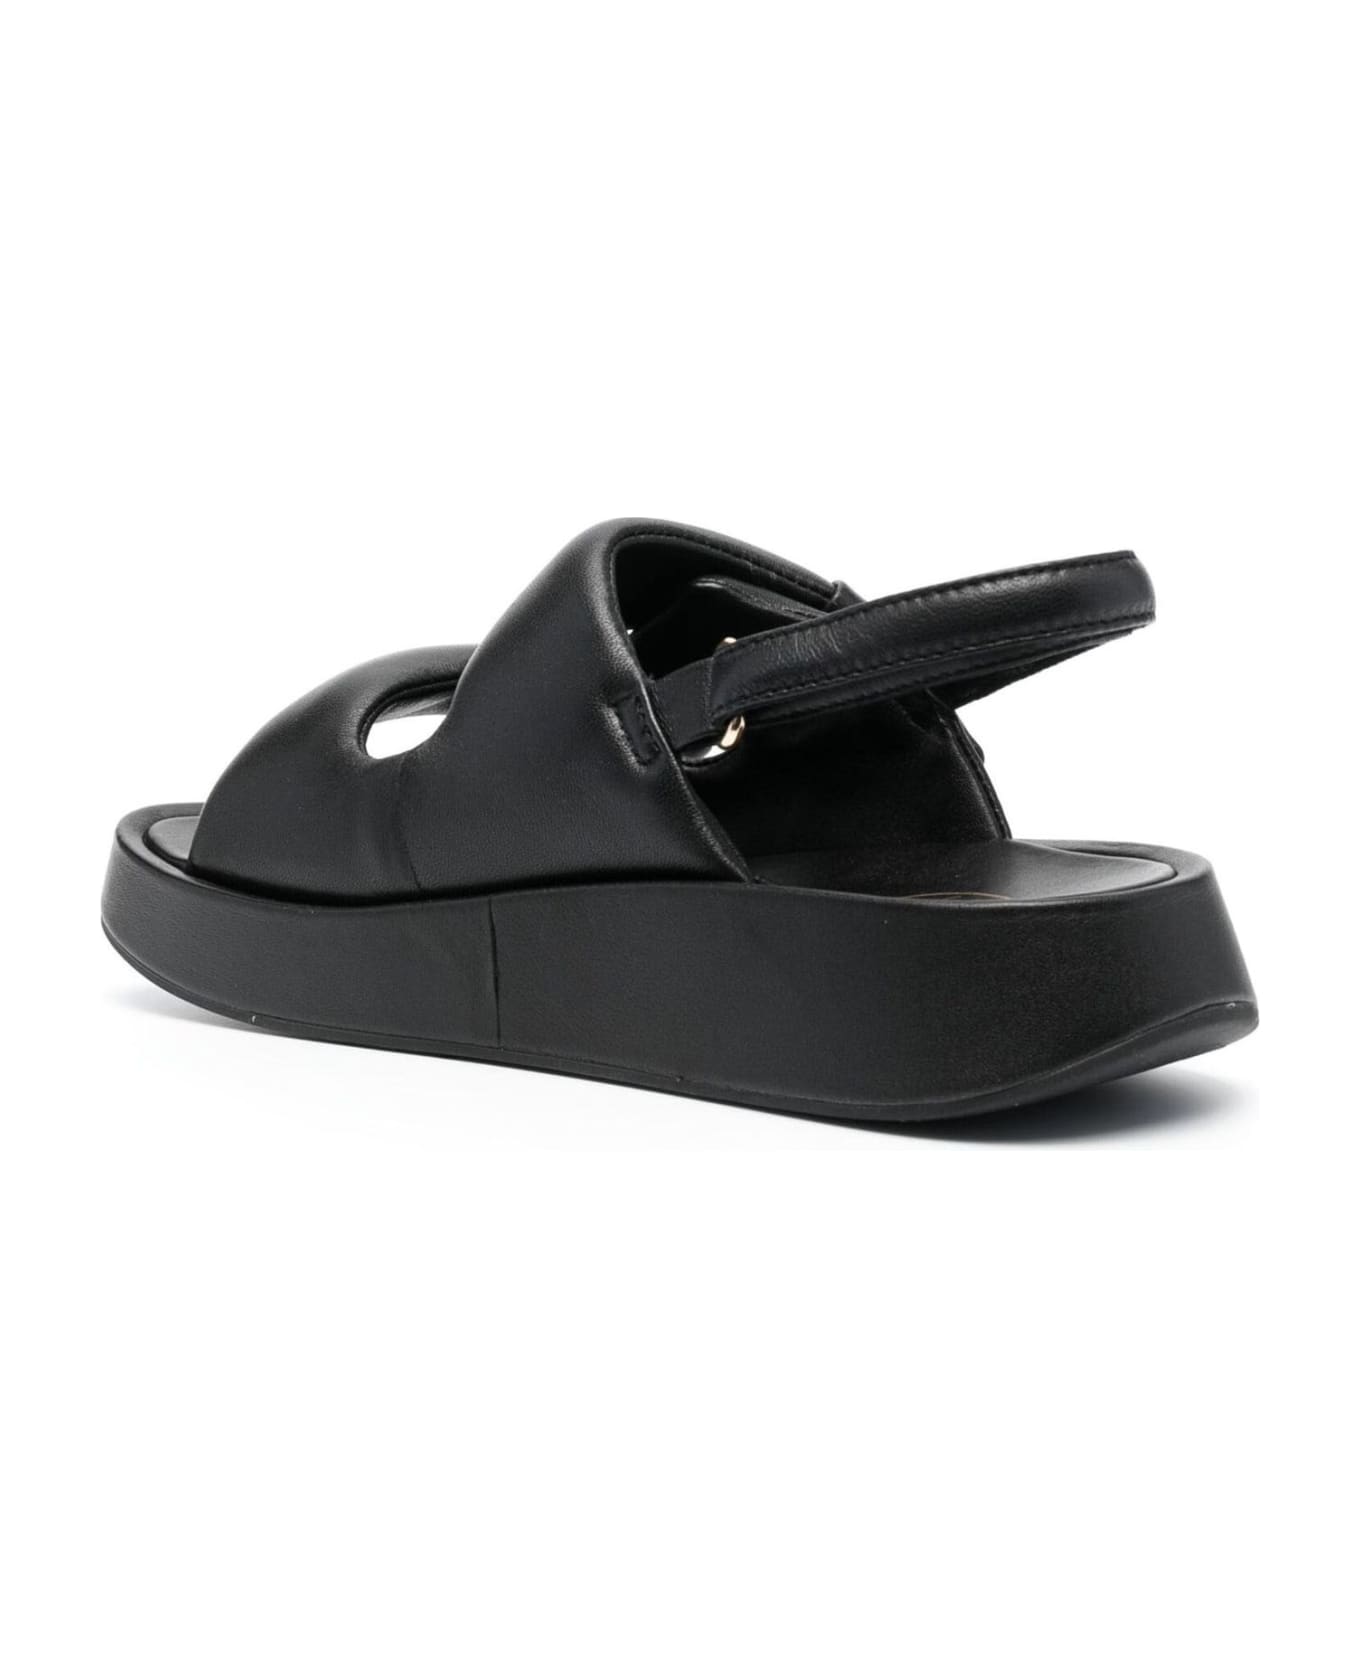 Ash Black Calf Leather Vinci Sandals - Black サンダル